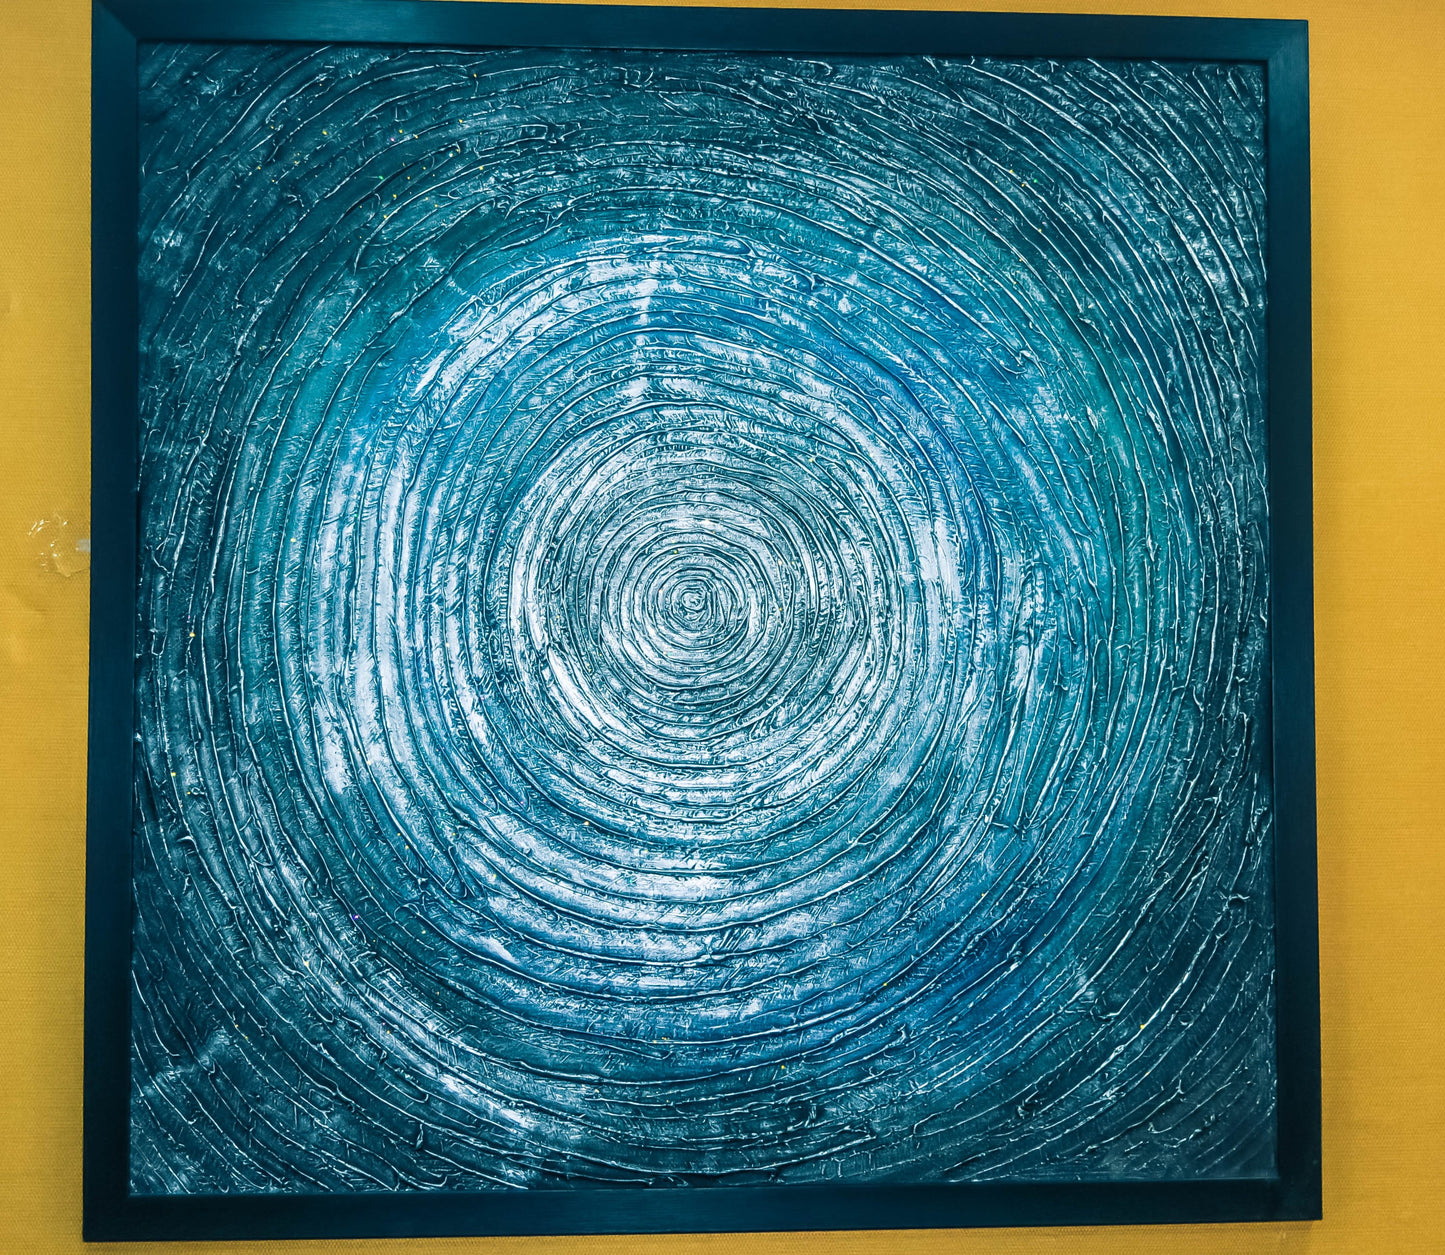 acrylic painting art spiral